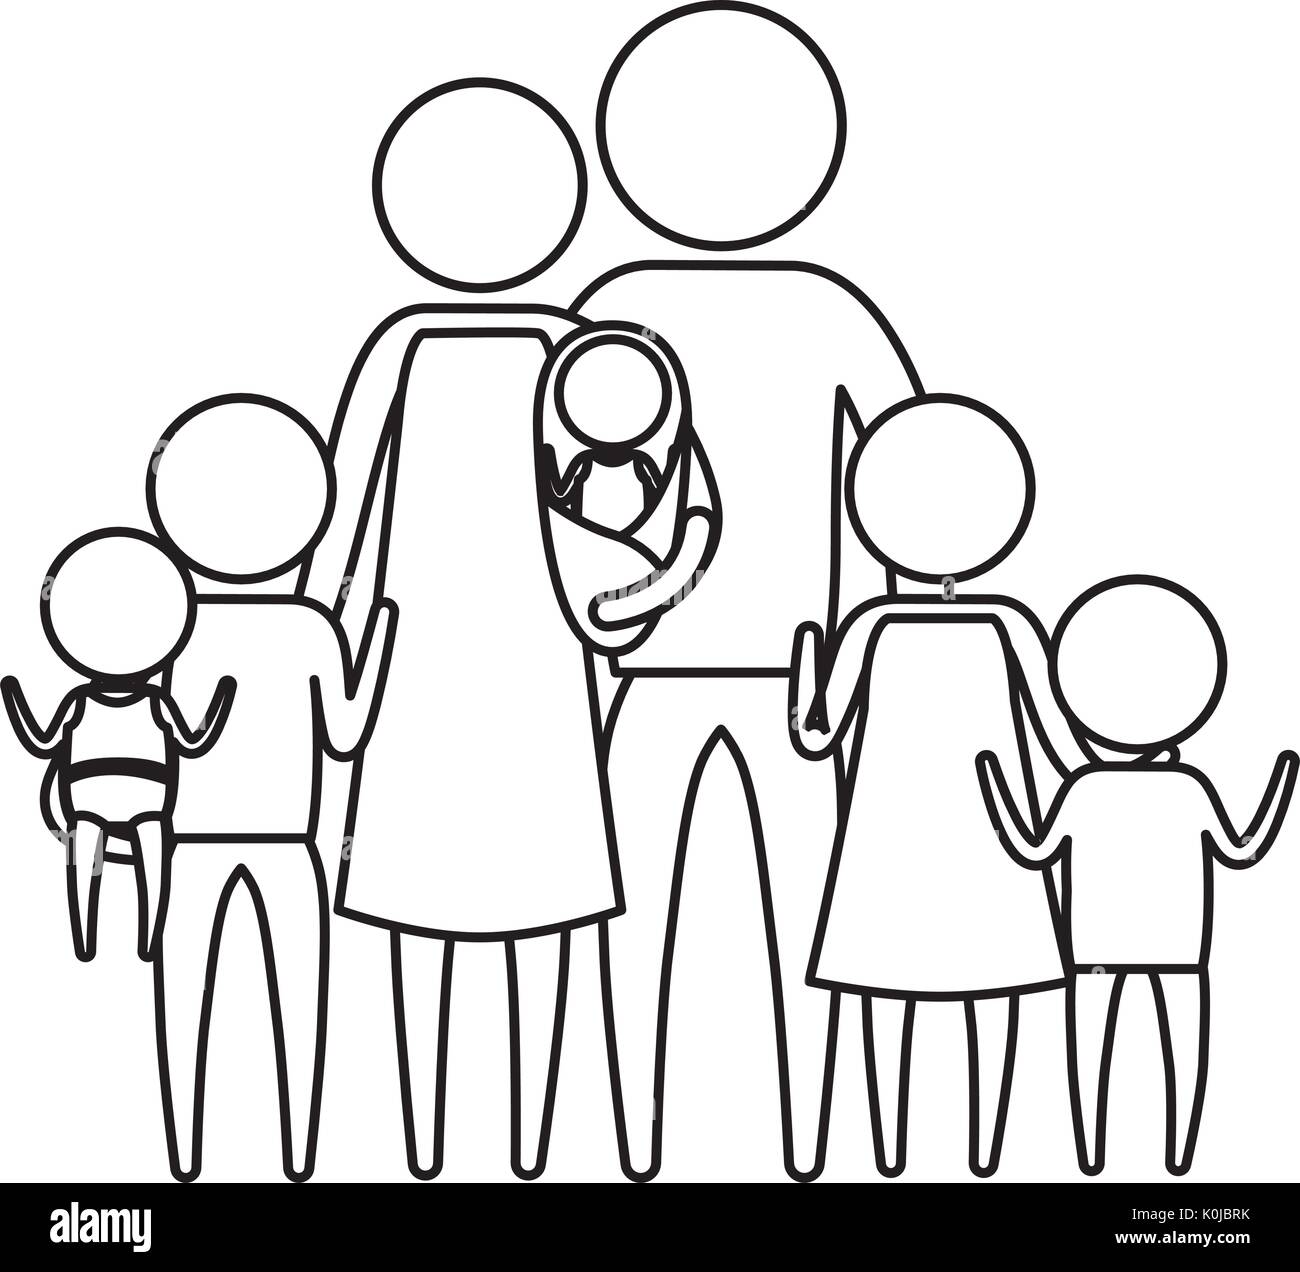 Skizze Silhouette der Piktogramm große Familie mit mehreren Kindern  Stock-Vektorgrafik - Alamy